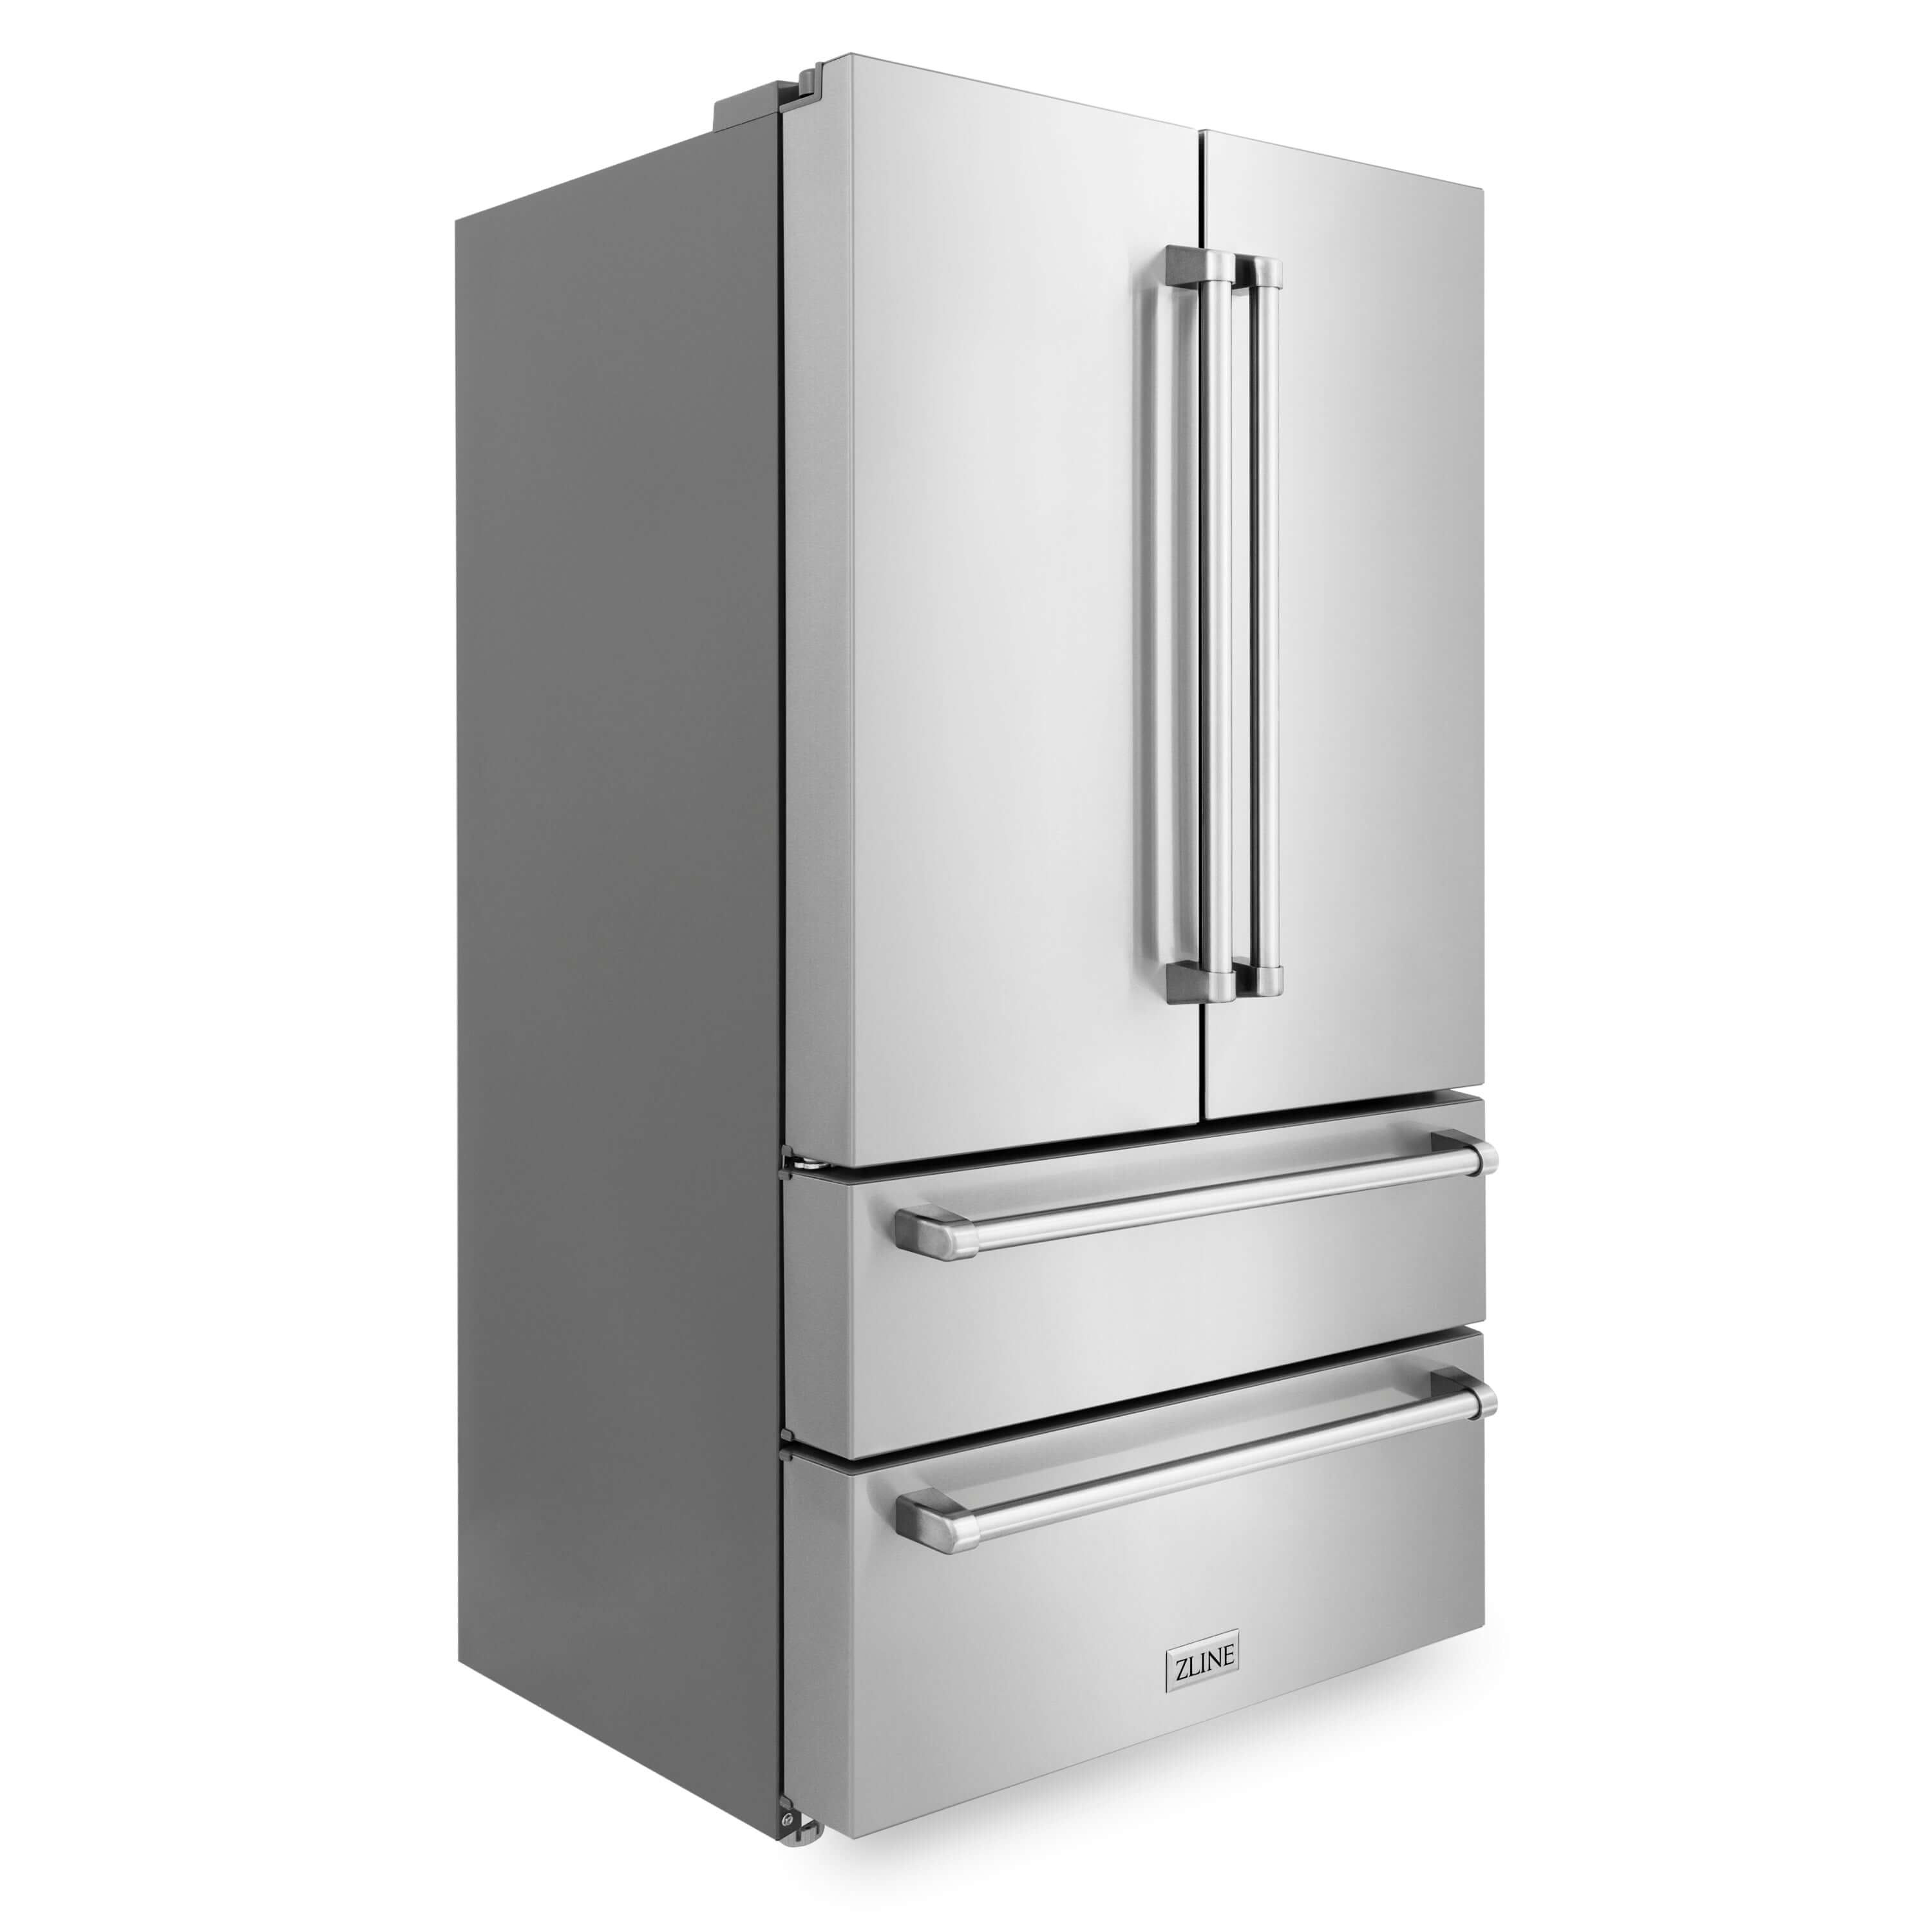 ZLINE 36 in. Freestanding French Door Refrigerator with Ice Maker in Fingerprint Resistant Stainless Steel (RFM-36) Far Side View